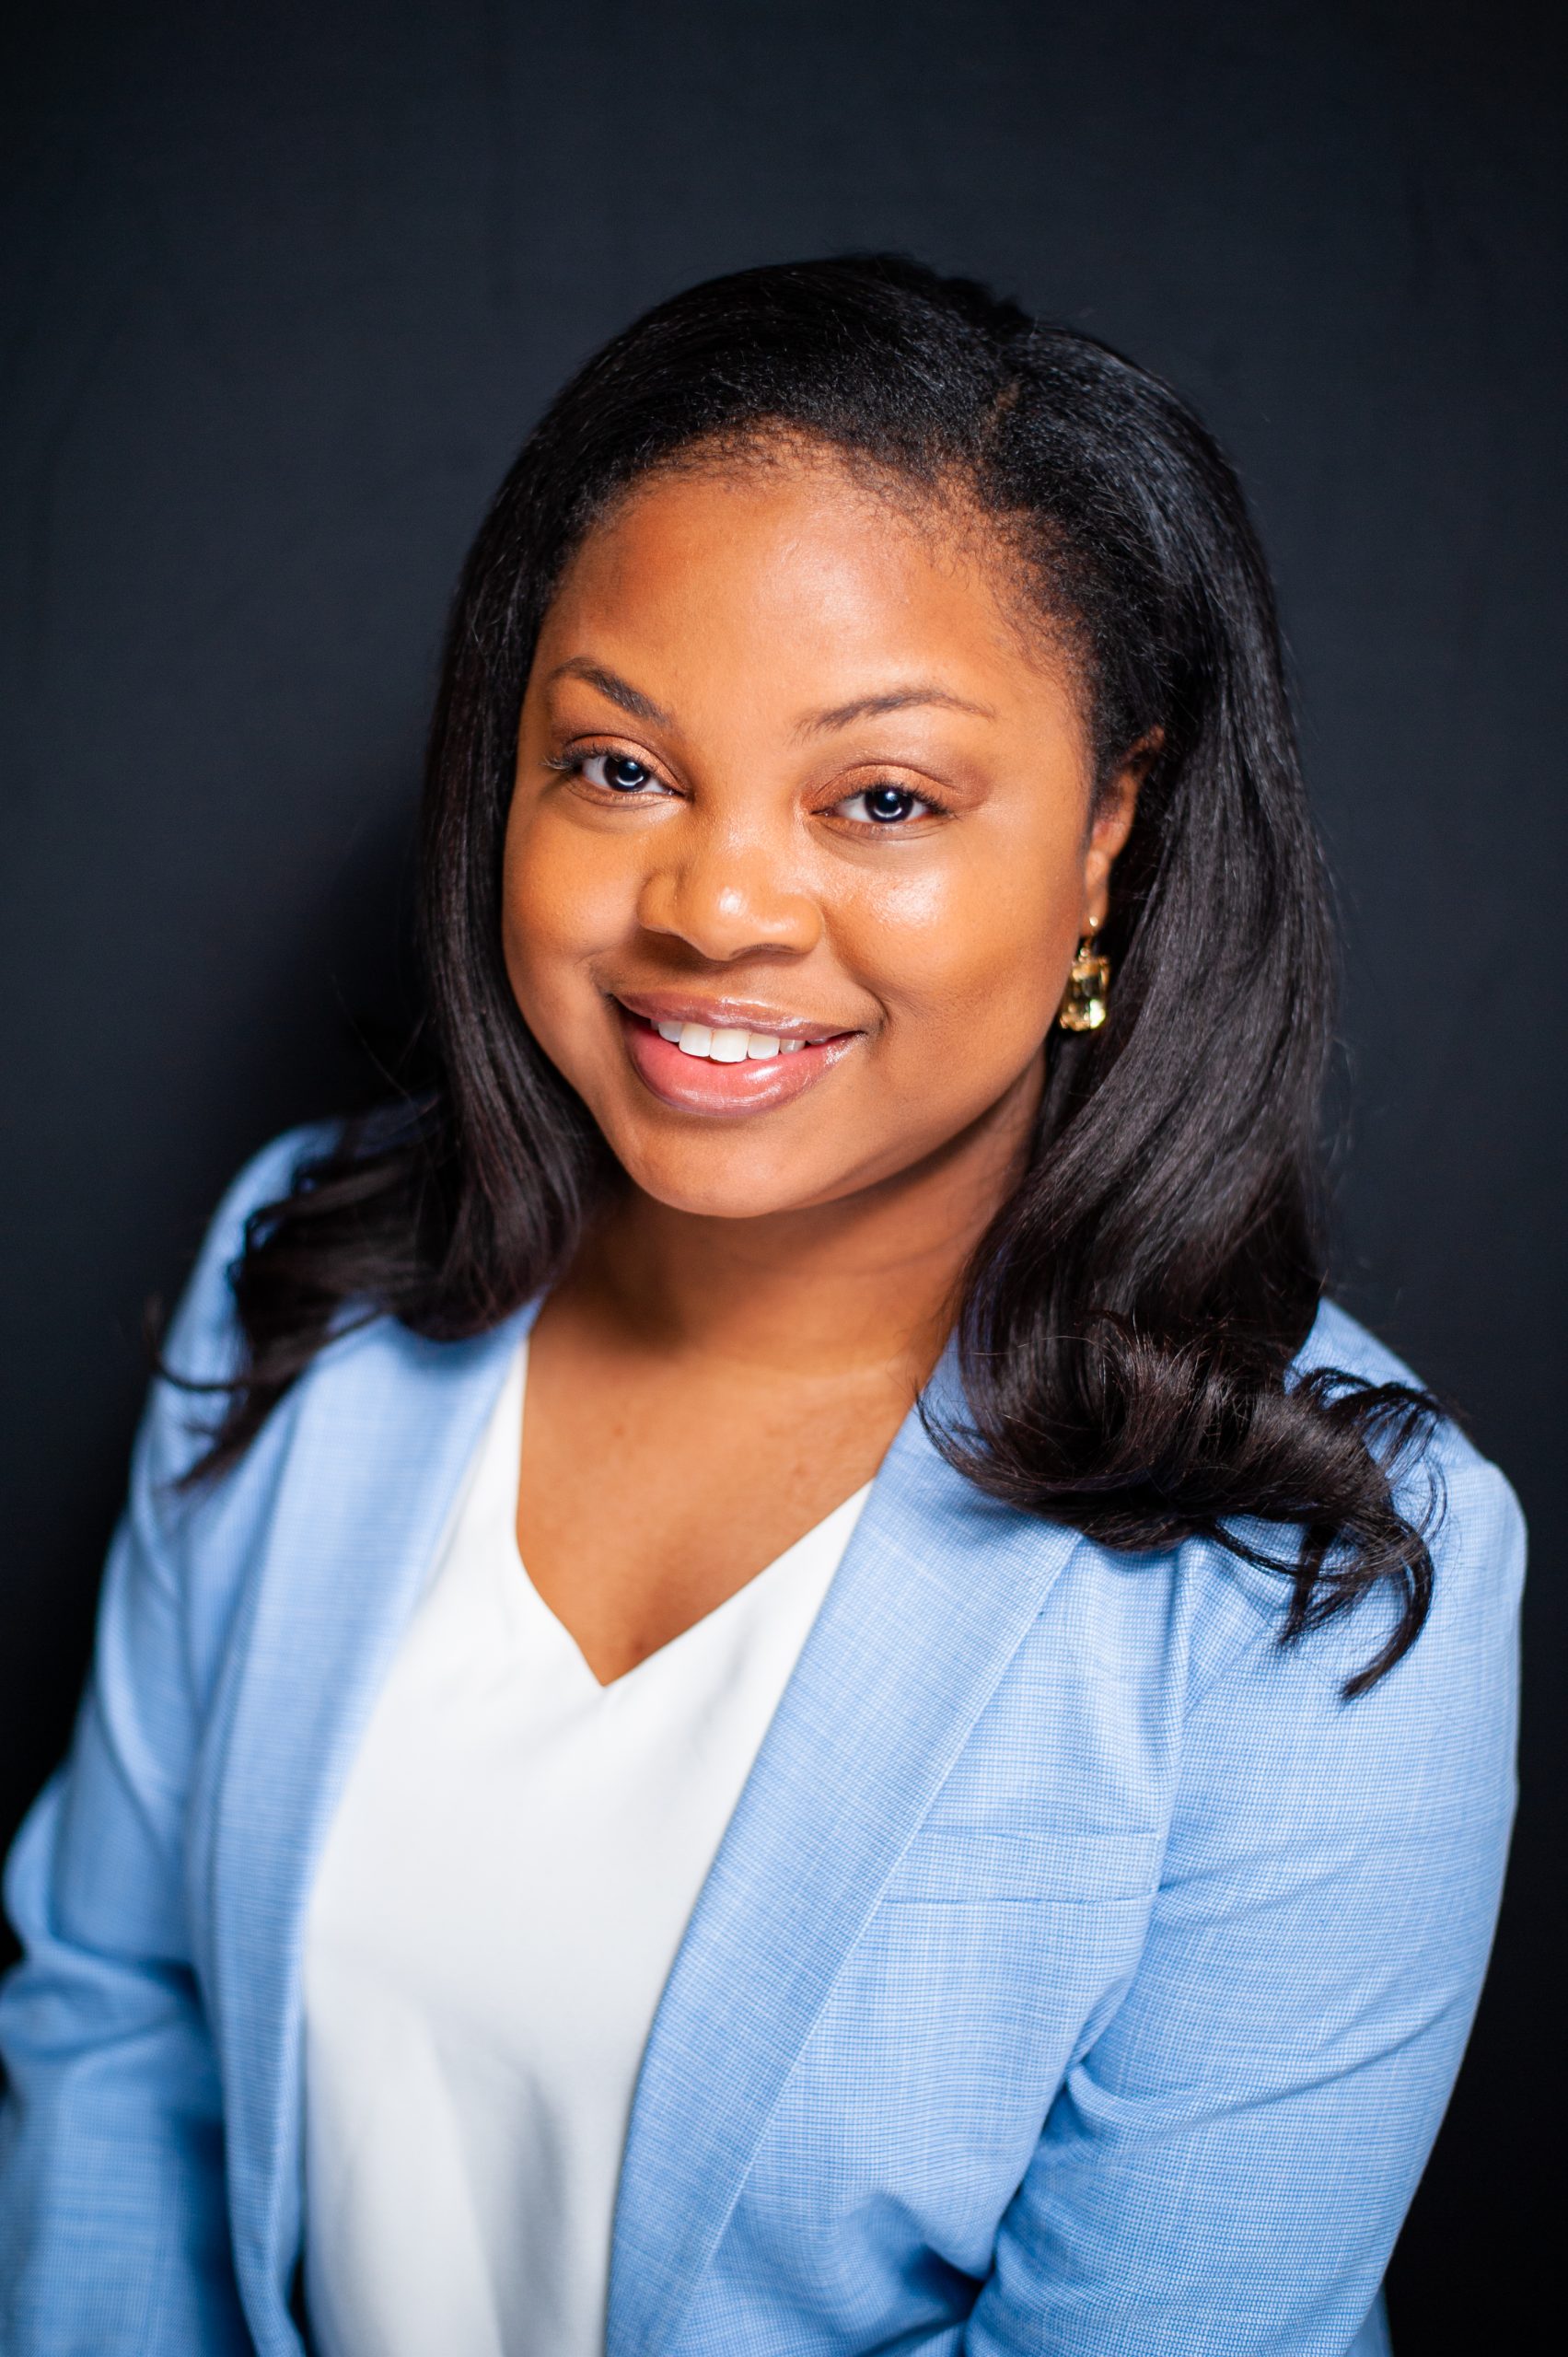 Black Woman Professional Headshots Atlanta JLondon Images